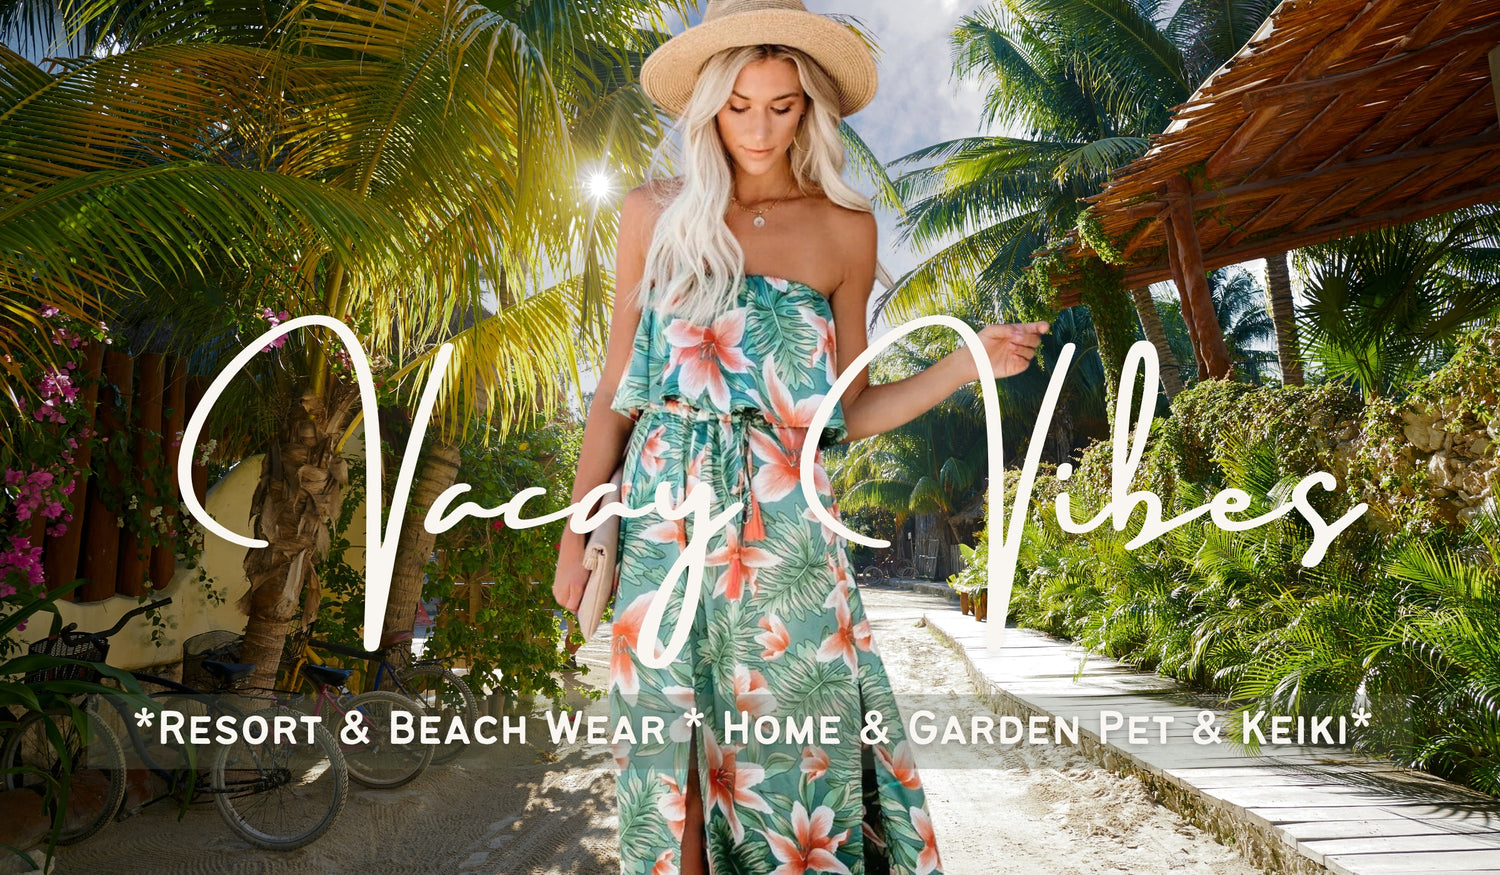 Resort Wear & Beach Wear, Maxi Dresses, Summer Clothing, Swimwear